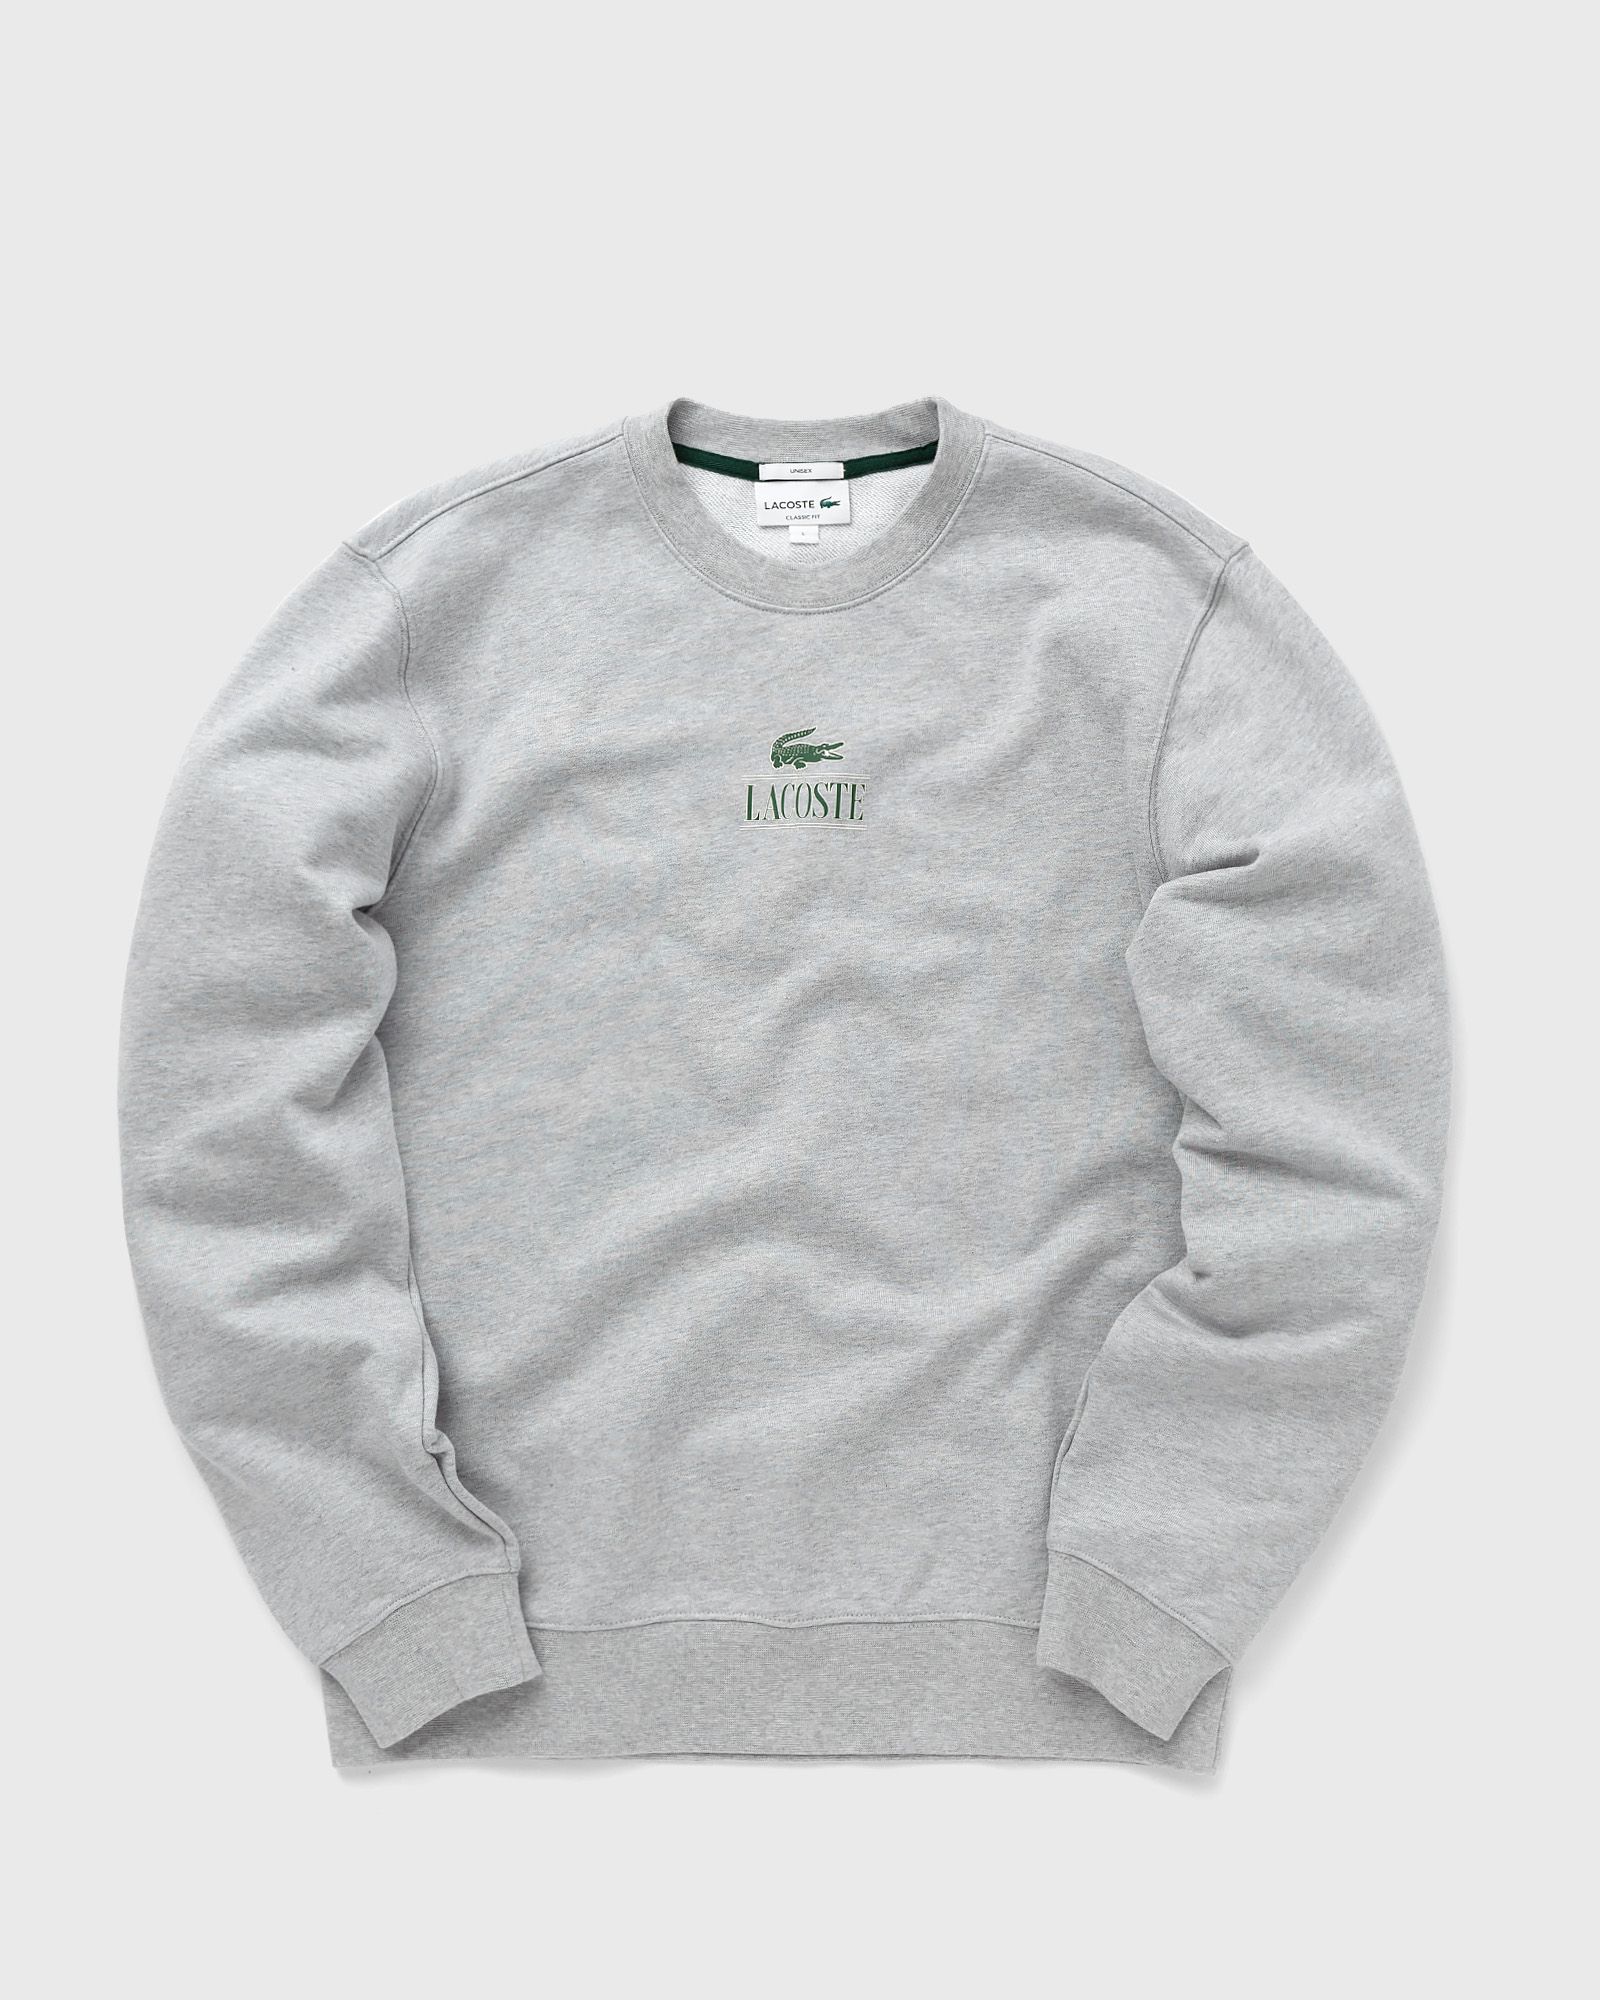 Lacoste - sweatshirts men sweatshirts grey in größe:m